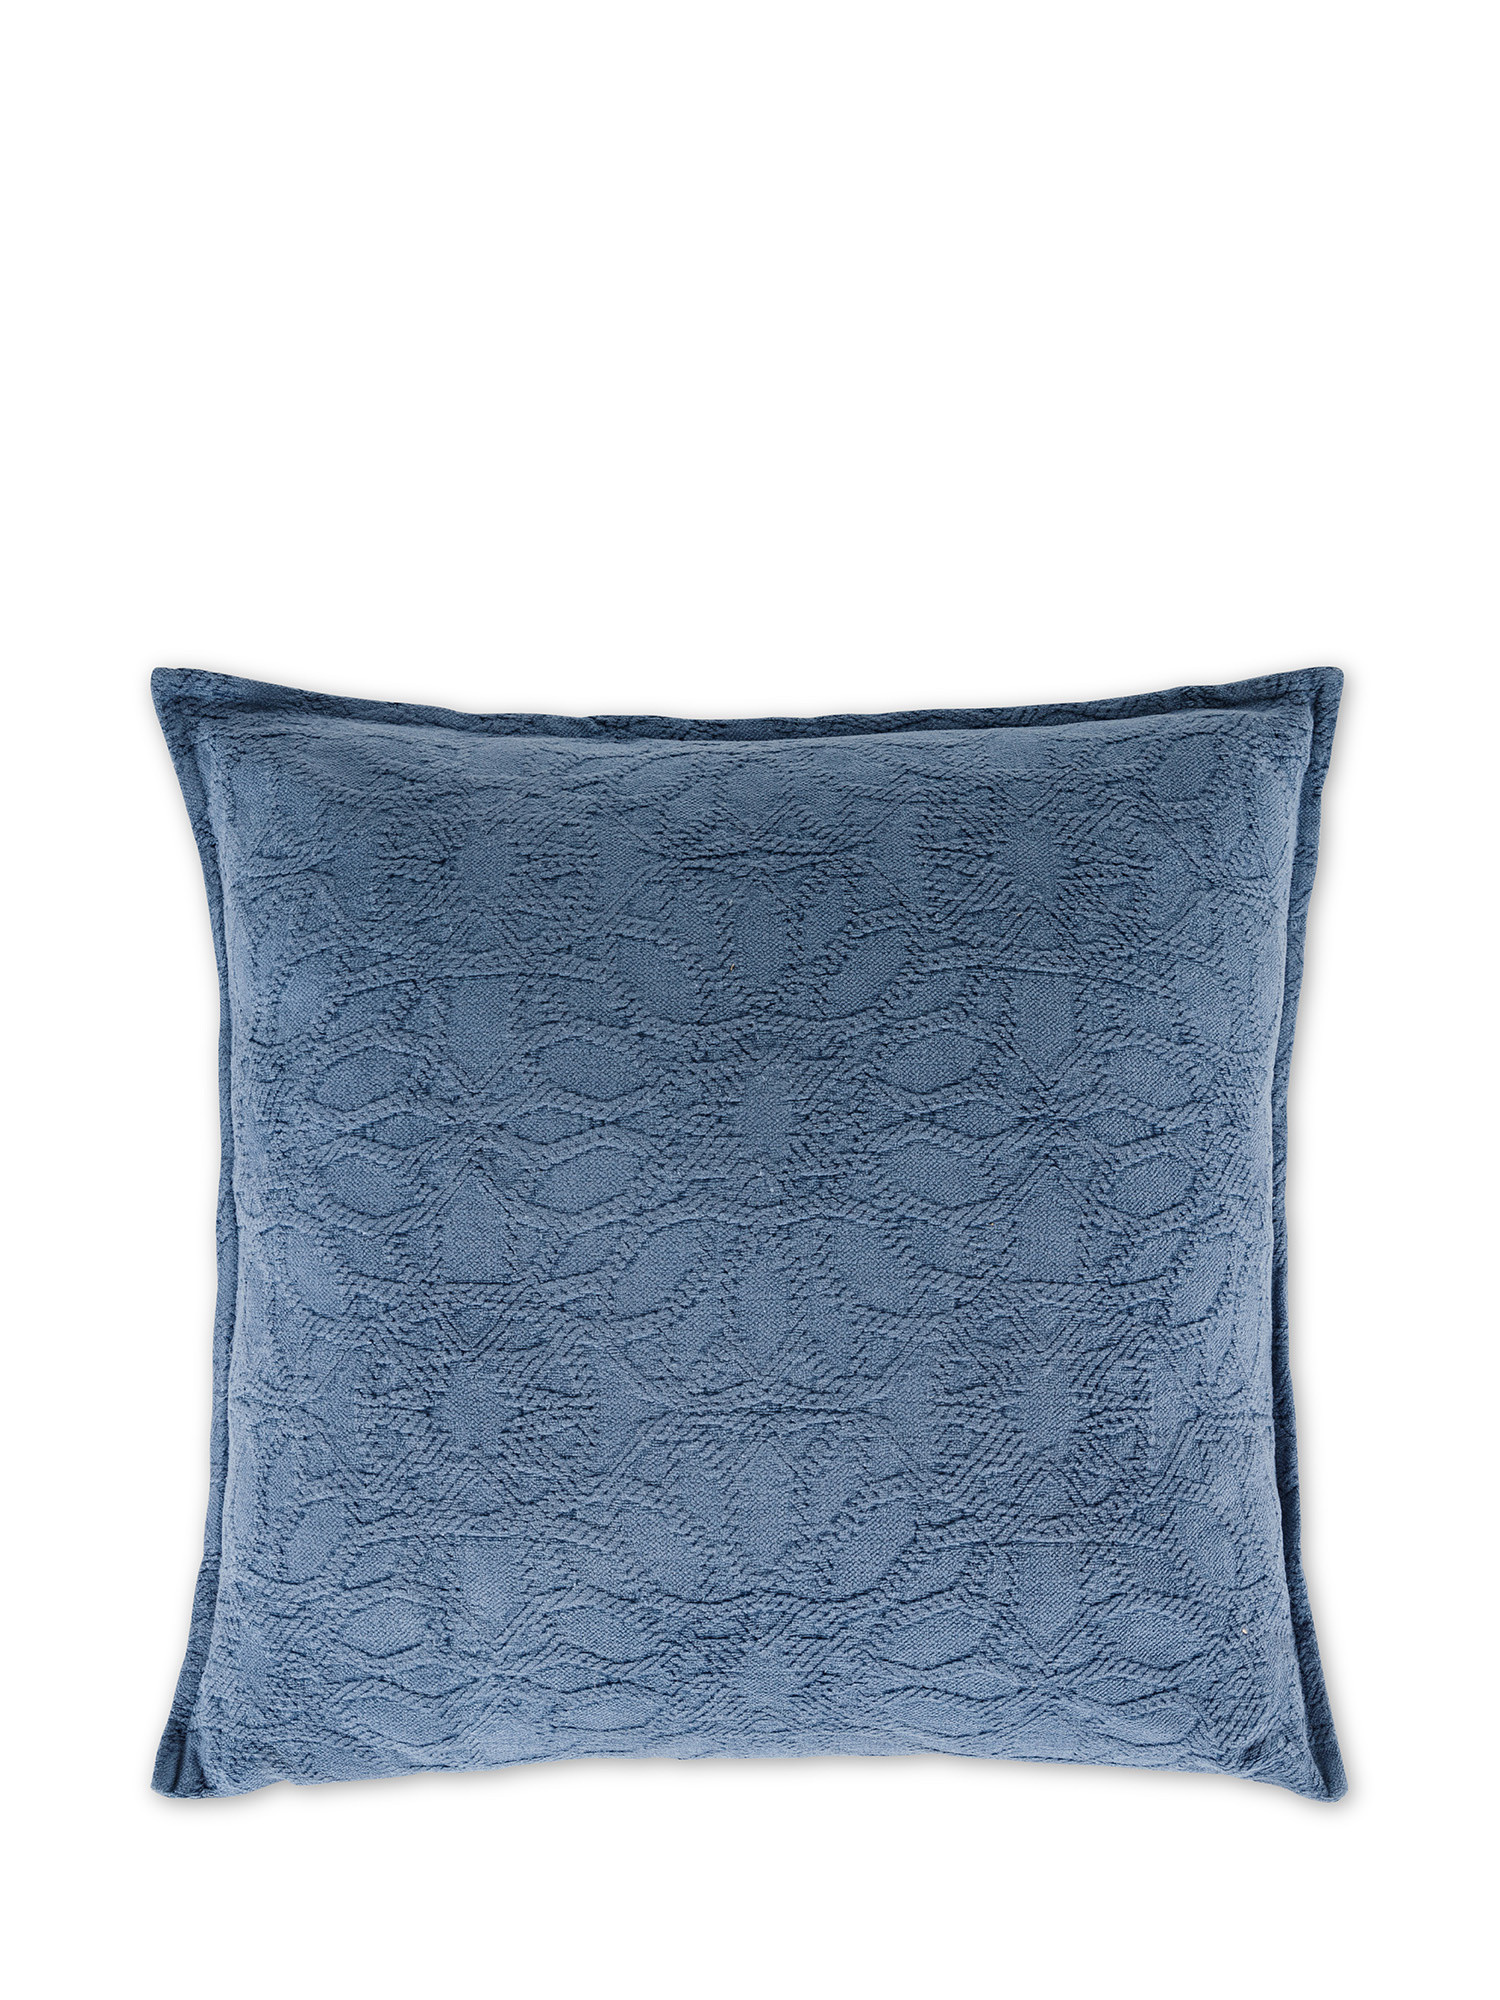 Cusicno tessuto lavato 45x45cm, Blu, large image number 0